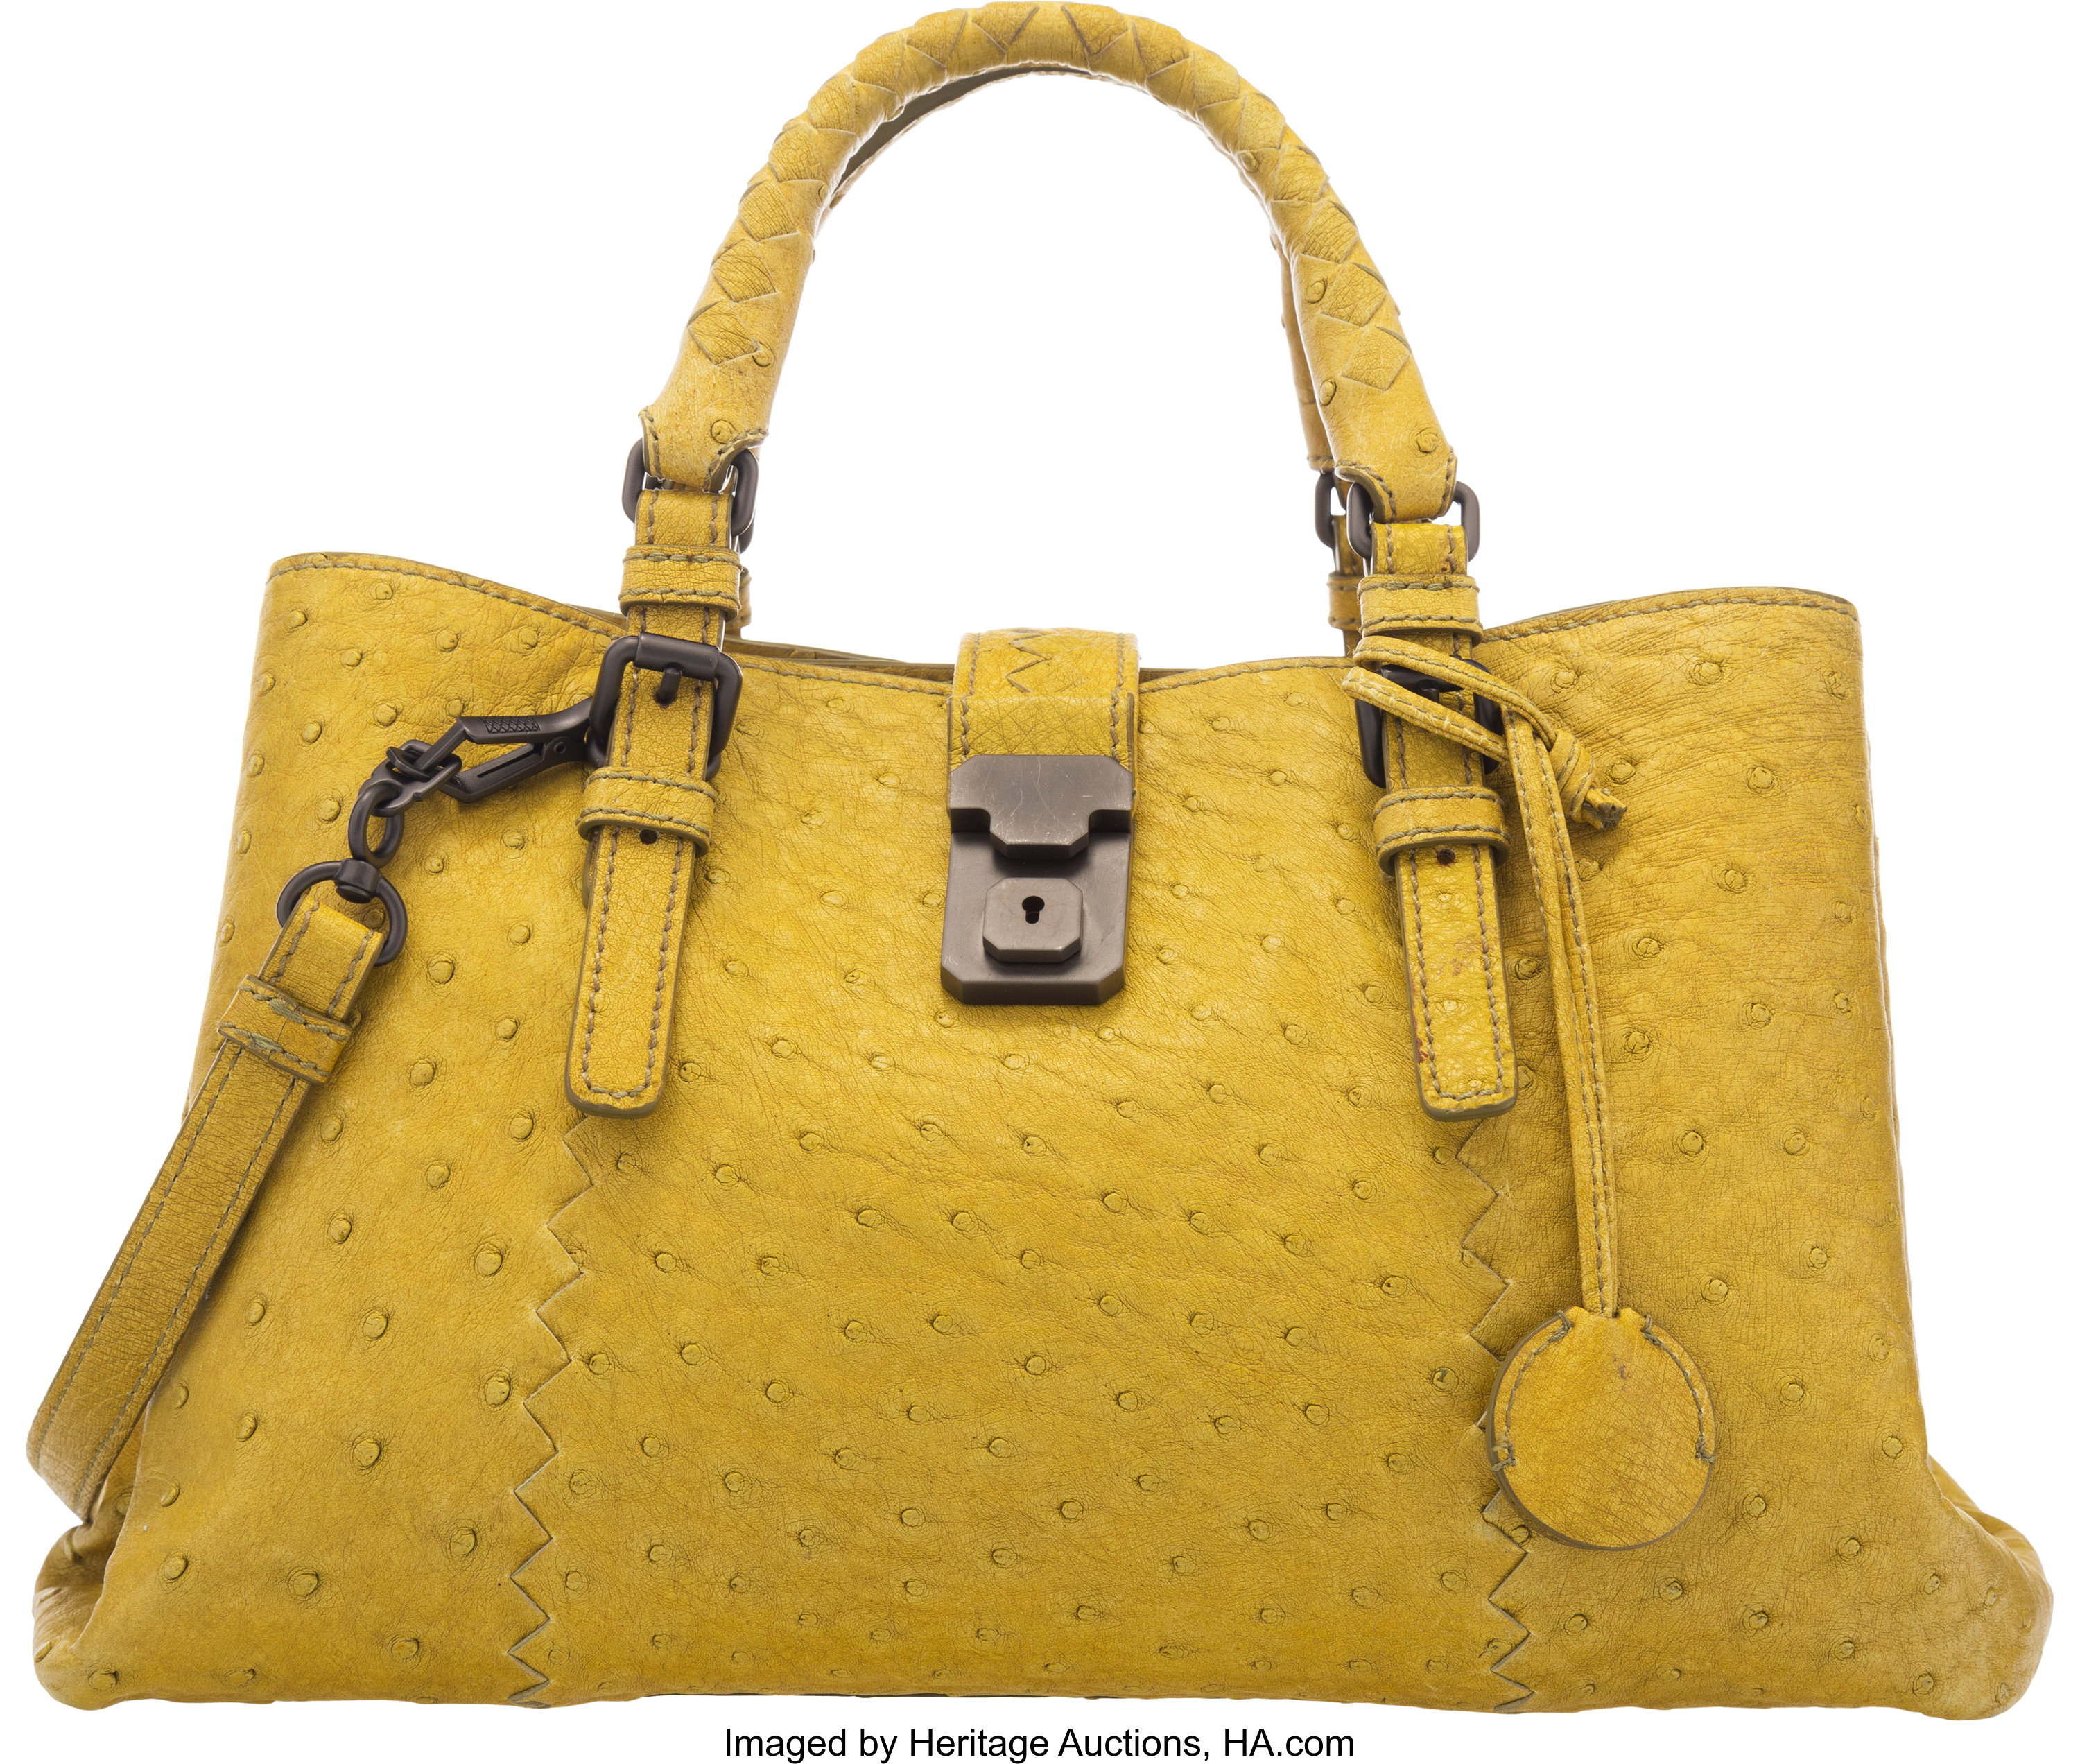 Sold at Auction: Vintage Bottega Veneta Tote Bag